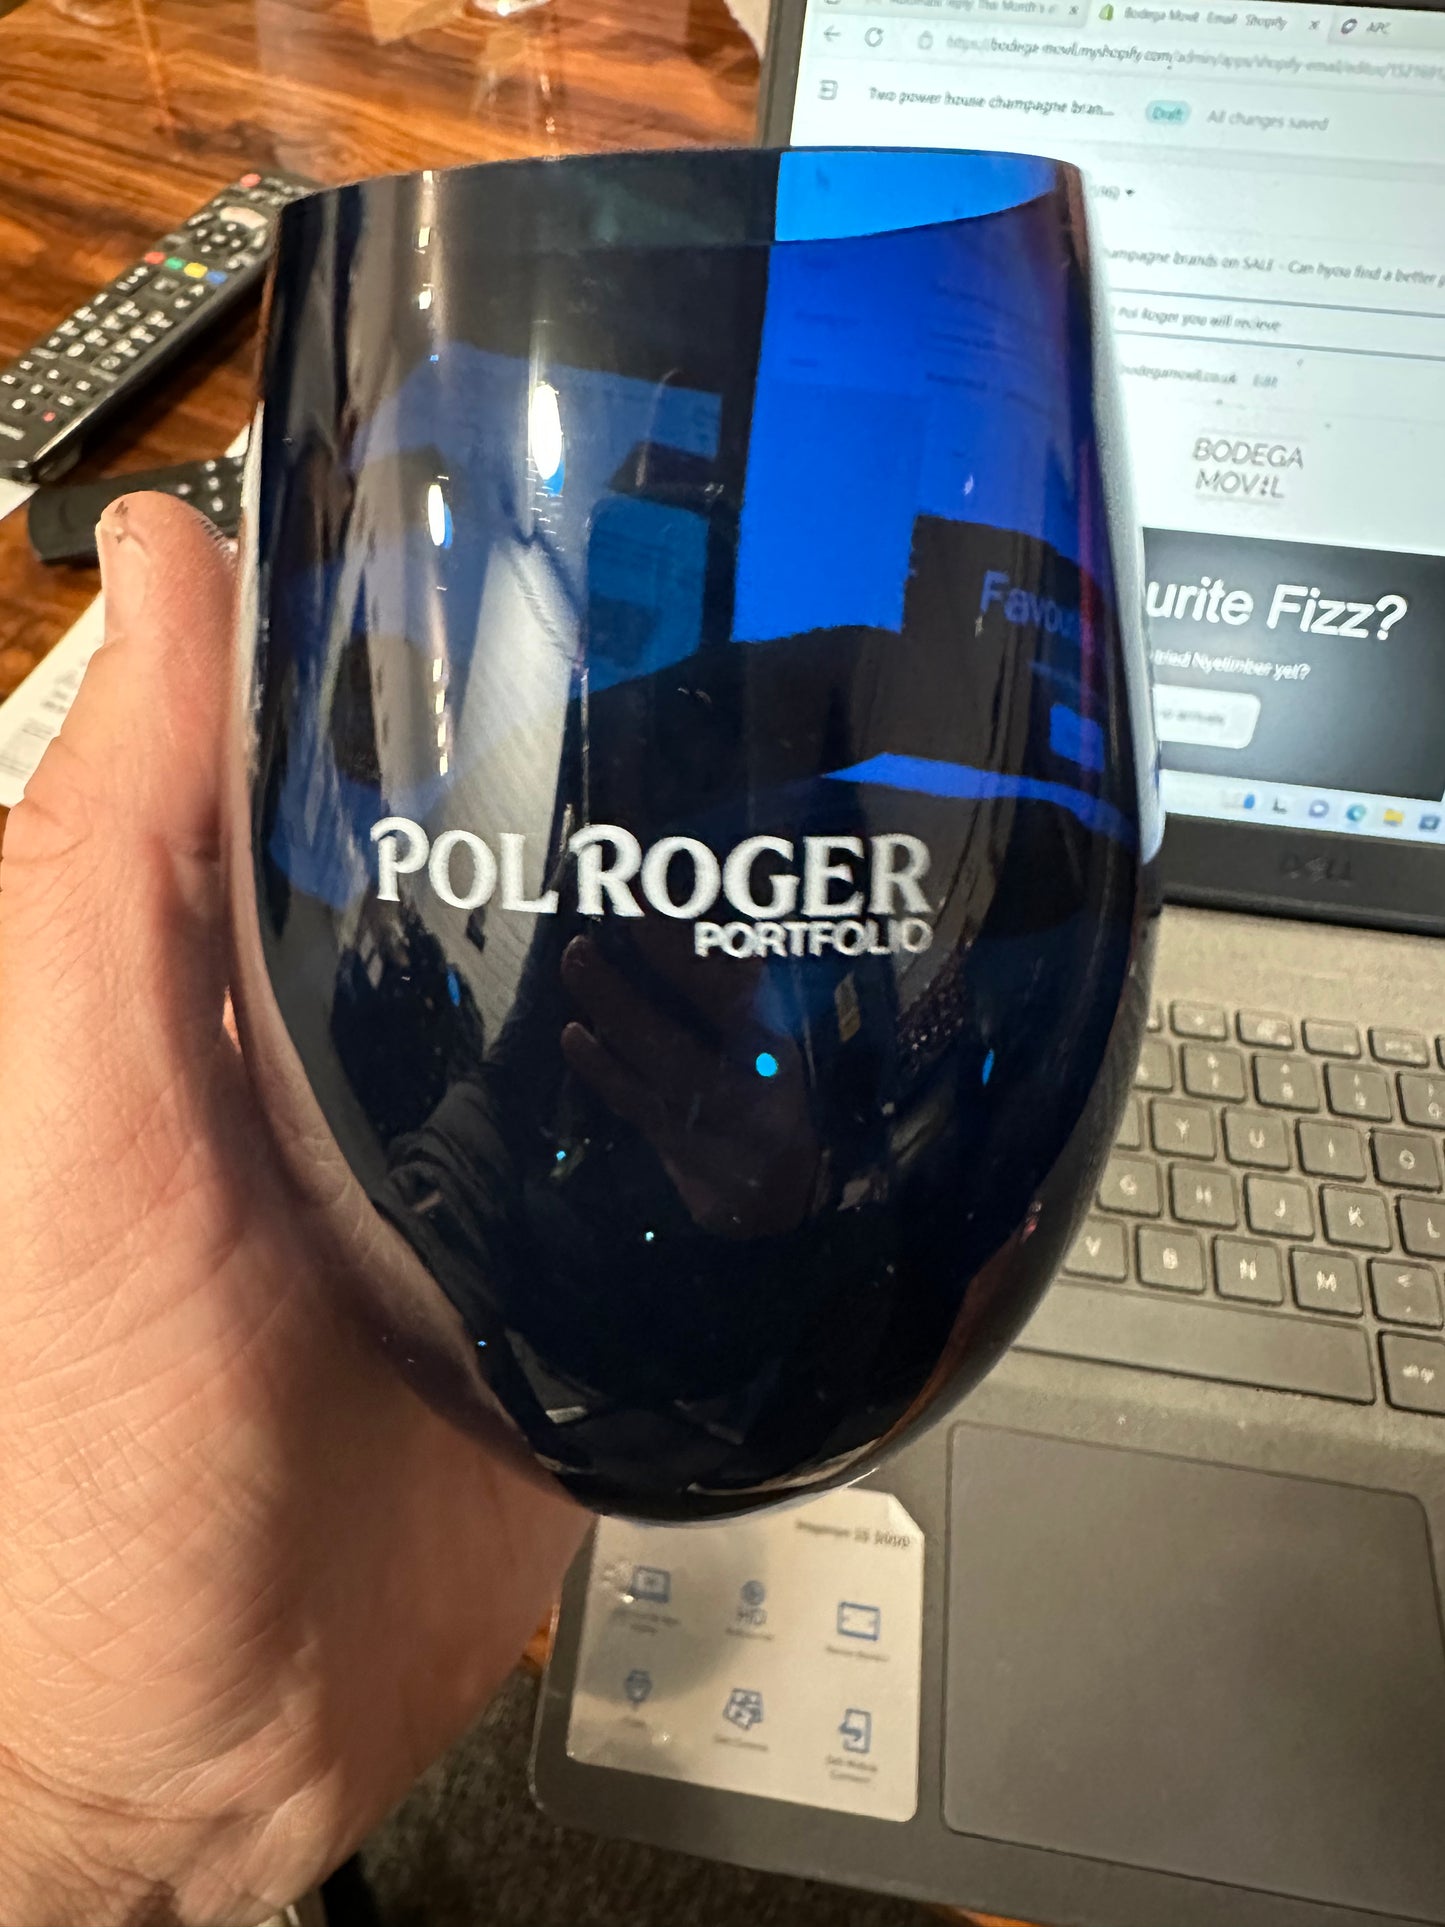 Pol Roger Brut Reserve NV + free branded acrylic glass - Bodega Movil